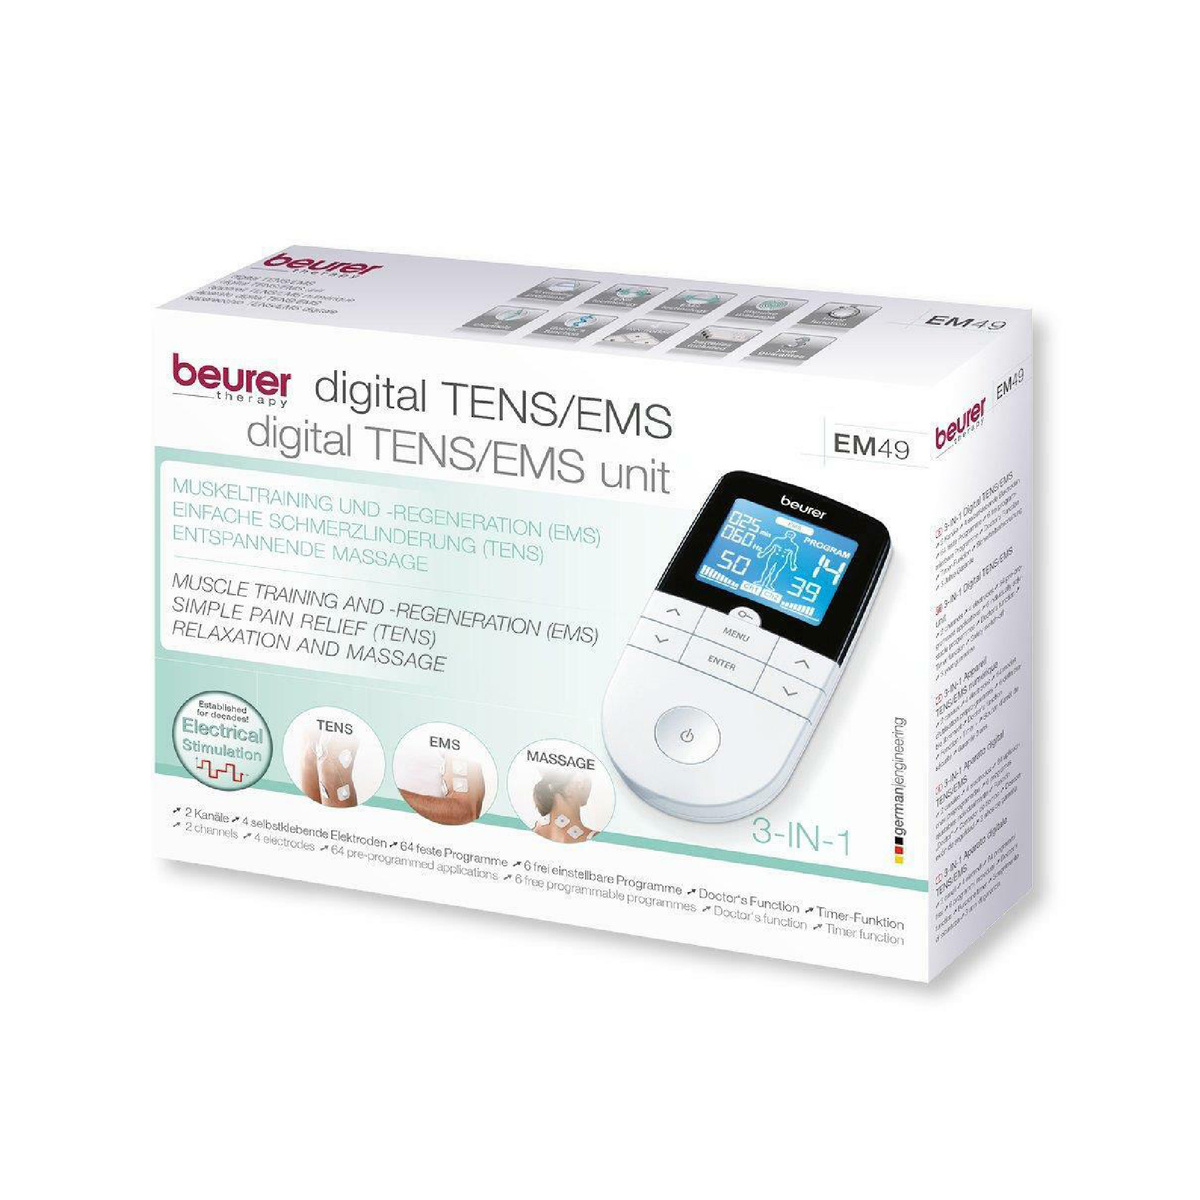 Beurer EM 49 digital TENS/EMS unit For intensive treatment